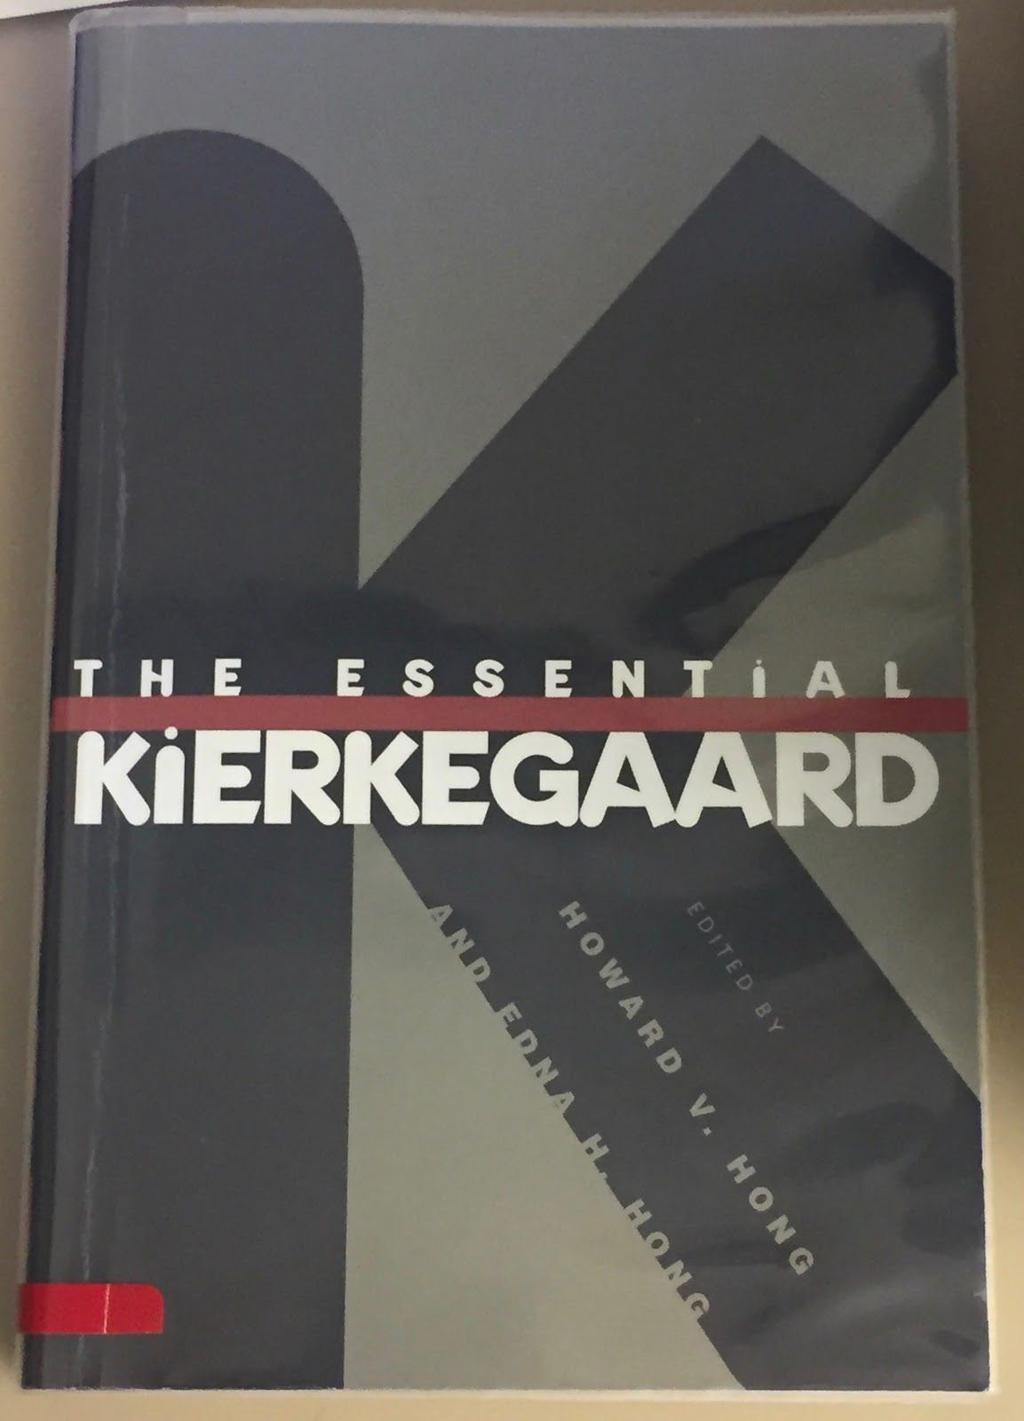 The Essential Kierkegaard by Howard V. Hong and Edna H. Hong This is the most comprehensive anthology of Søren Kierkegaard.